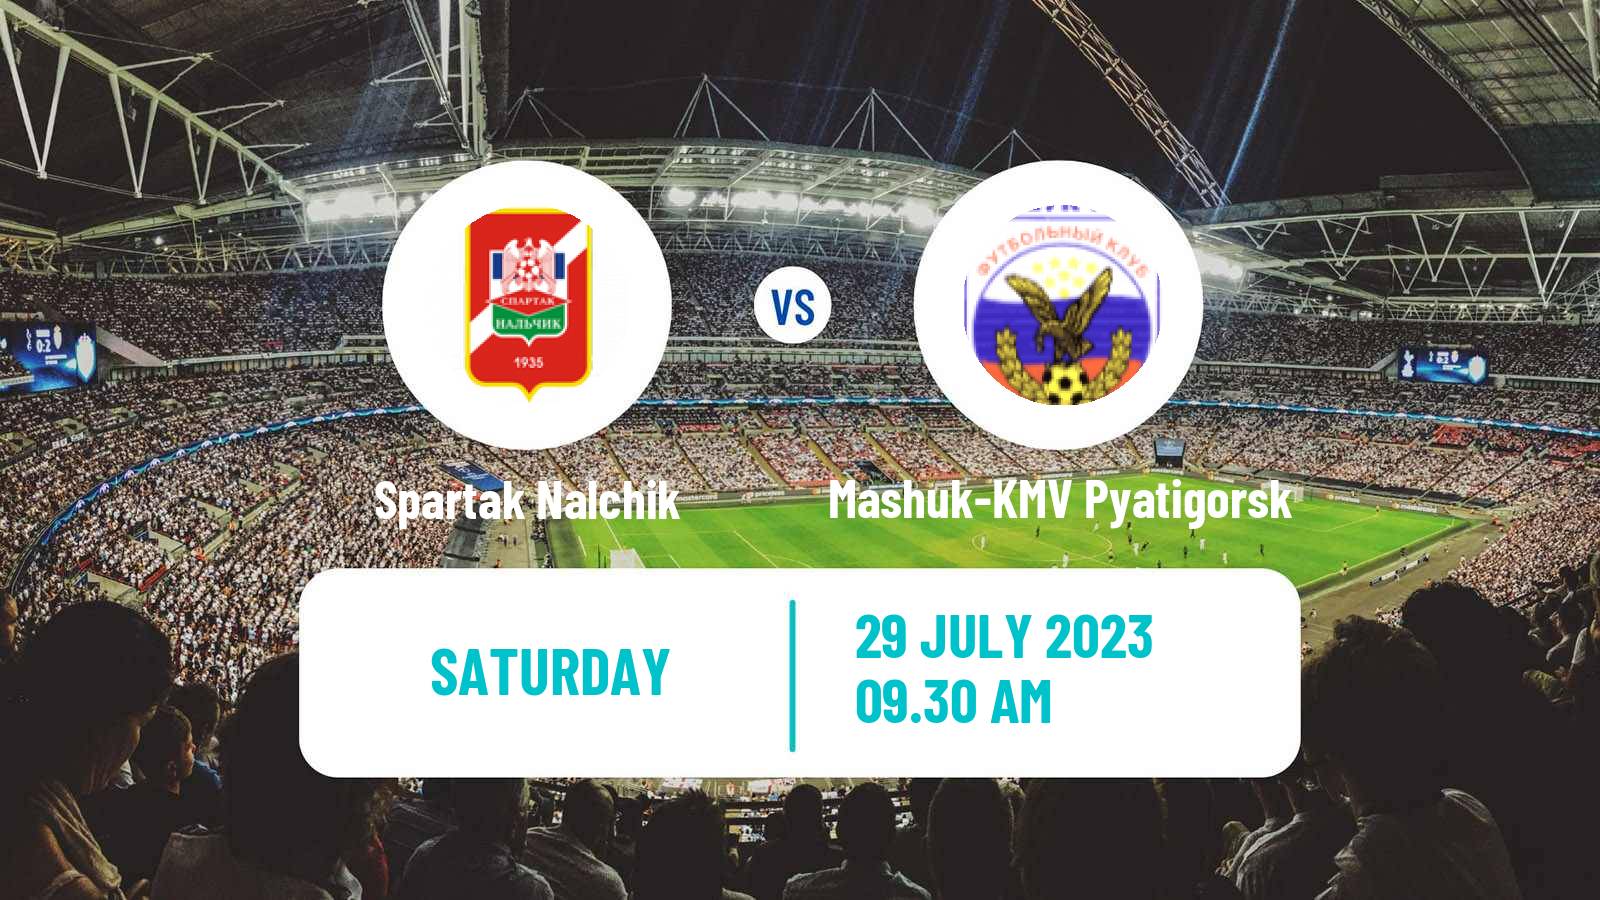 Soccer FNL 2 Division B Group 1 Spartak Nalchik - Mashuk-KMV Pyatigorsk